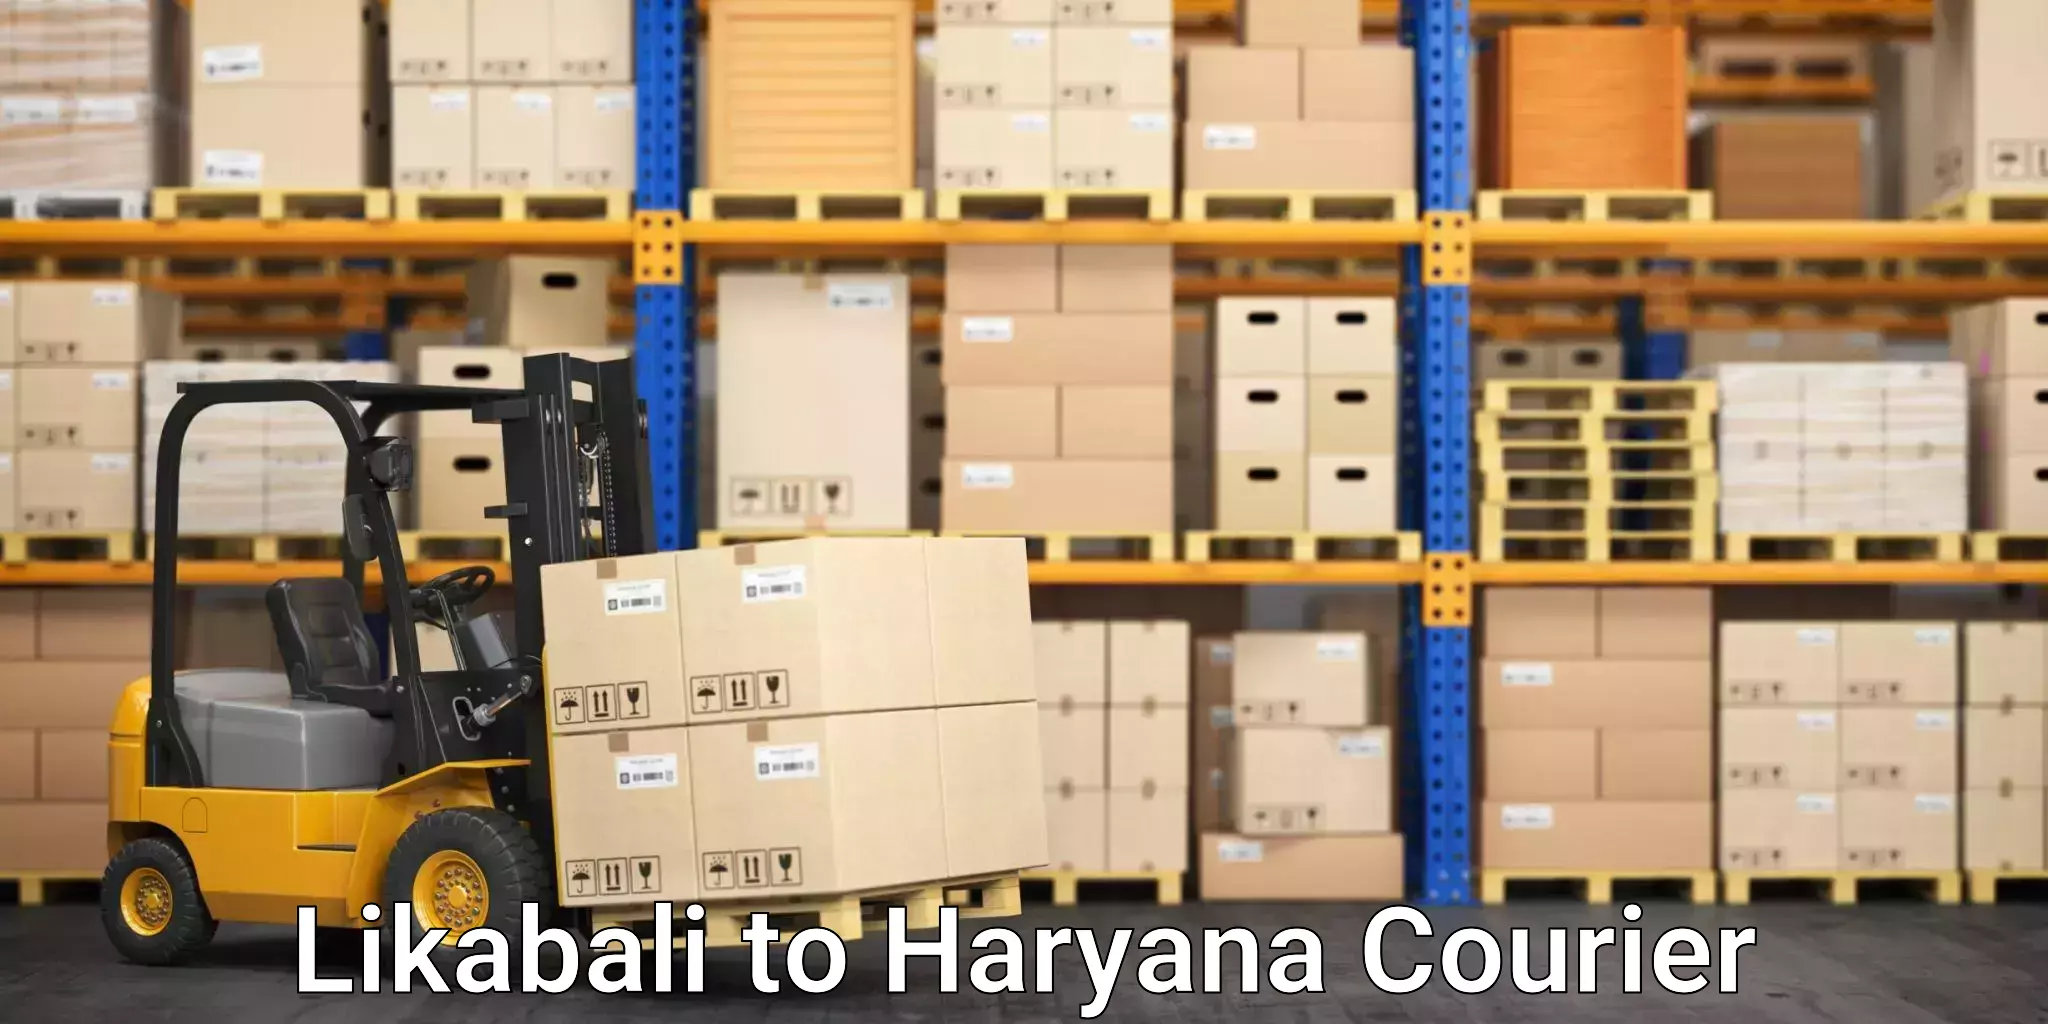 Courier service partnerships Likabali to Haryana